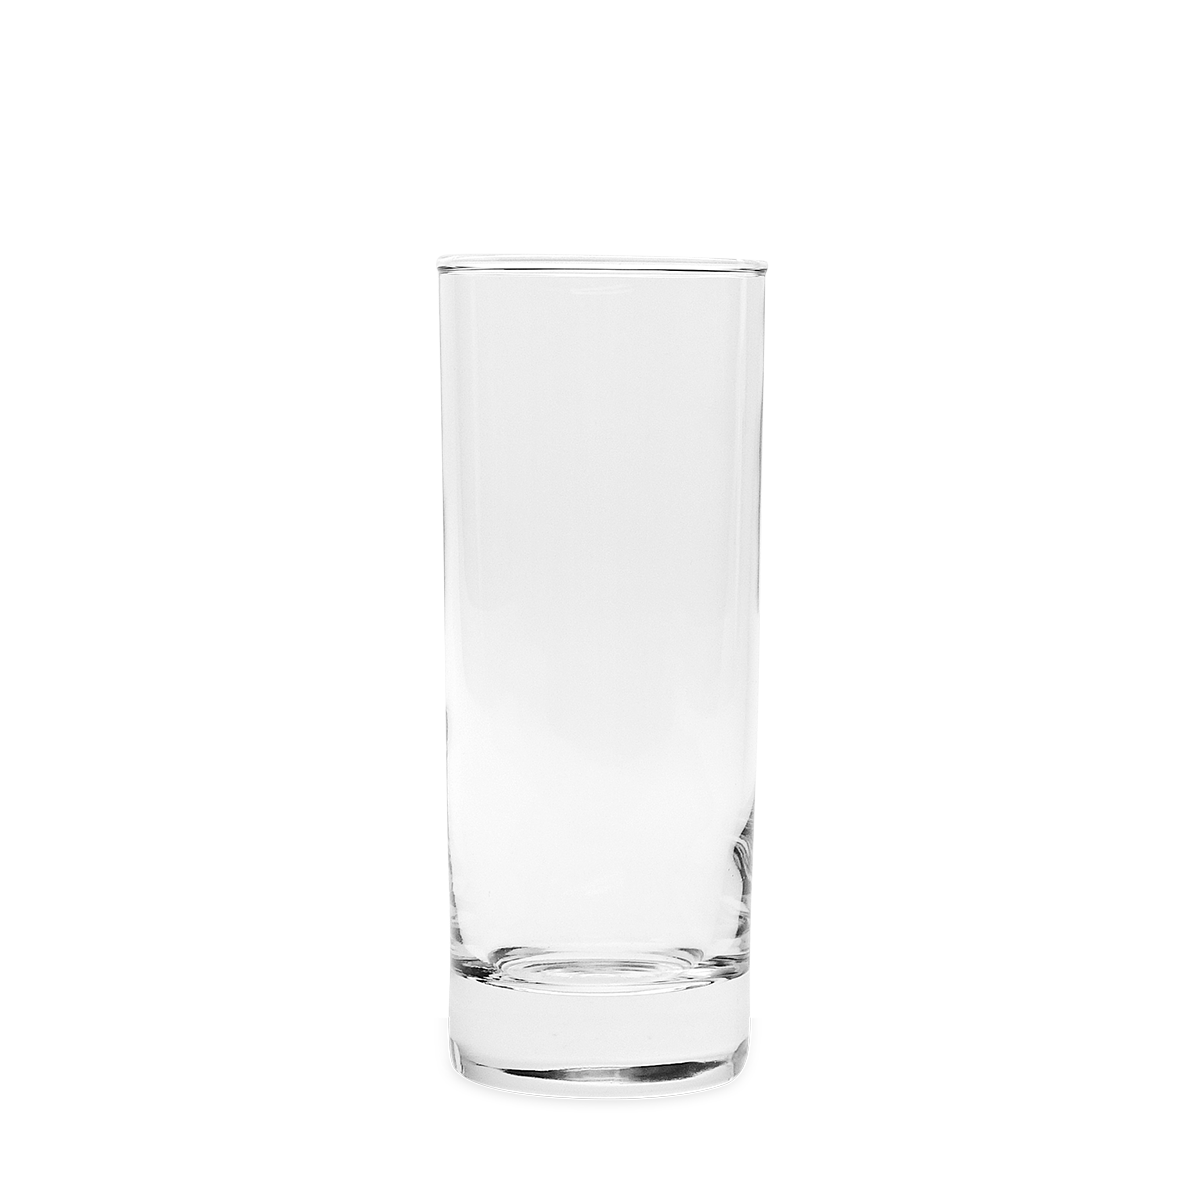 COCKTAIL KINGDOM - BUSHWELL COLLINS GLASS